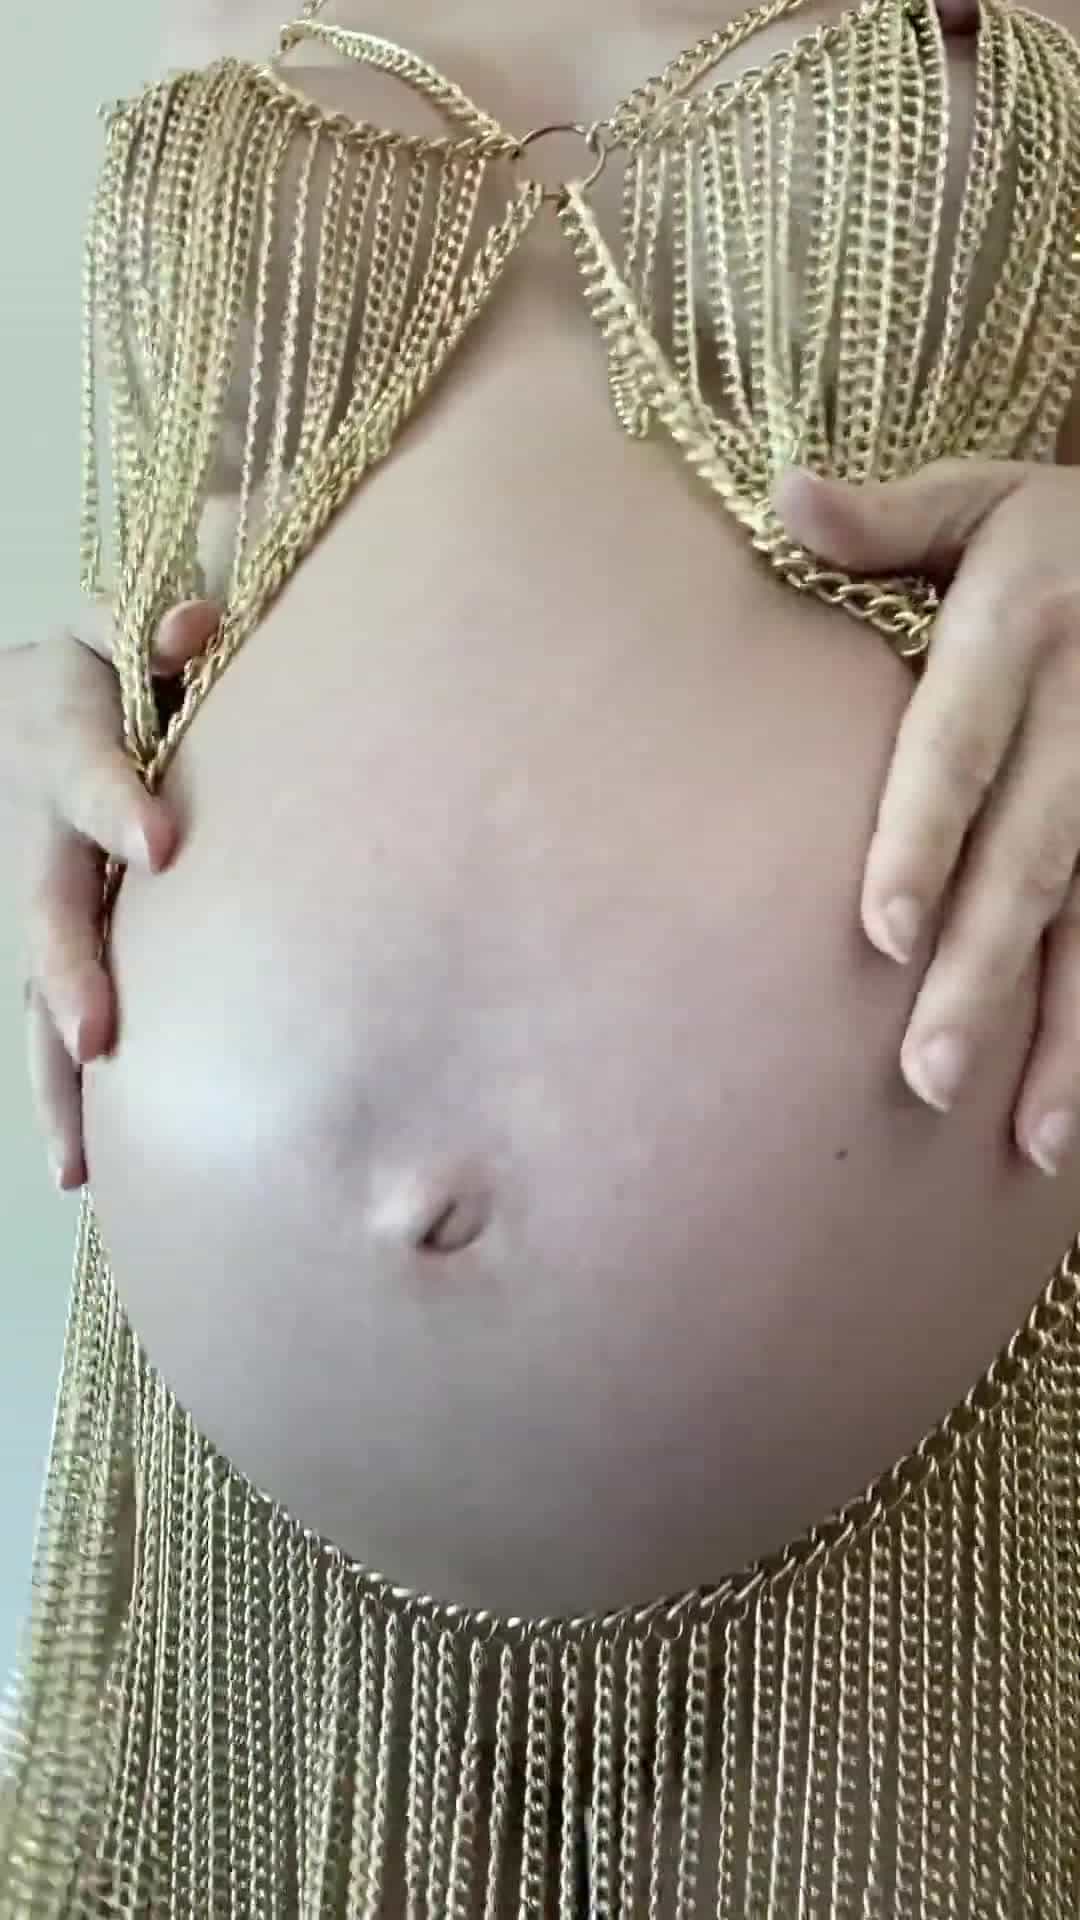 Big overdue 42 week belly